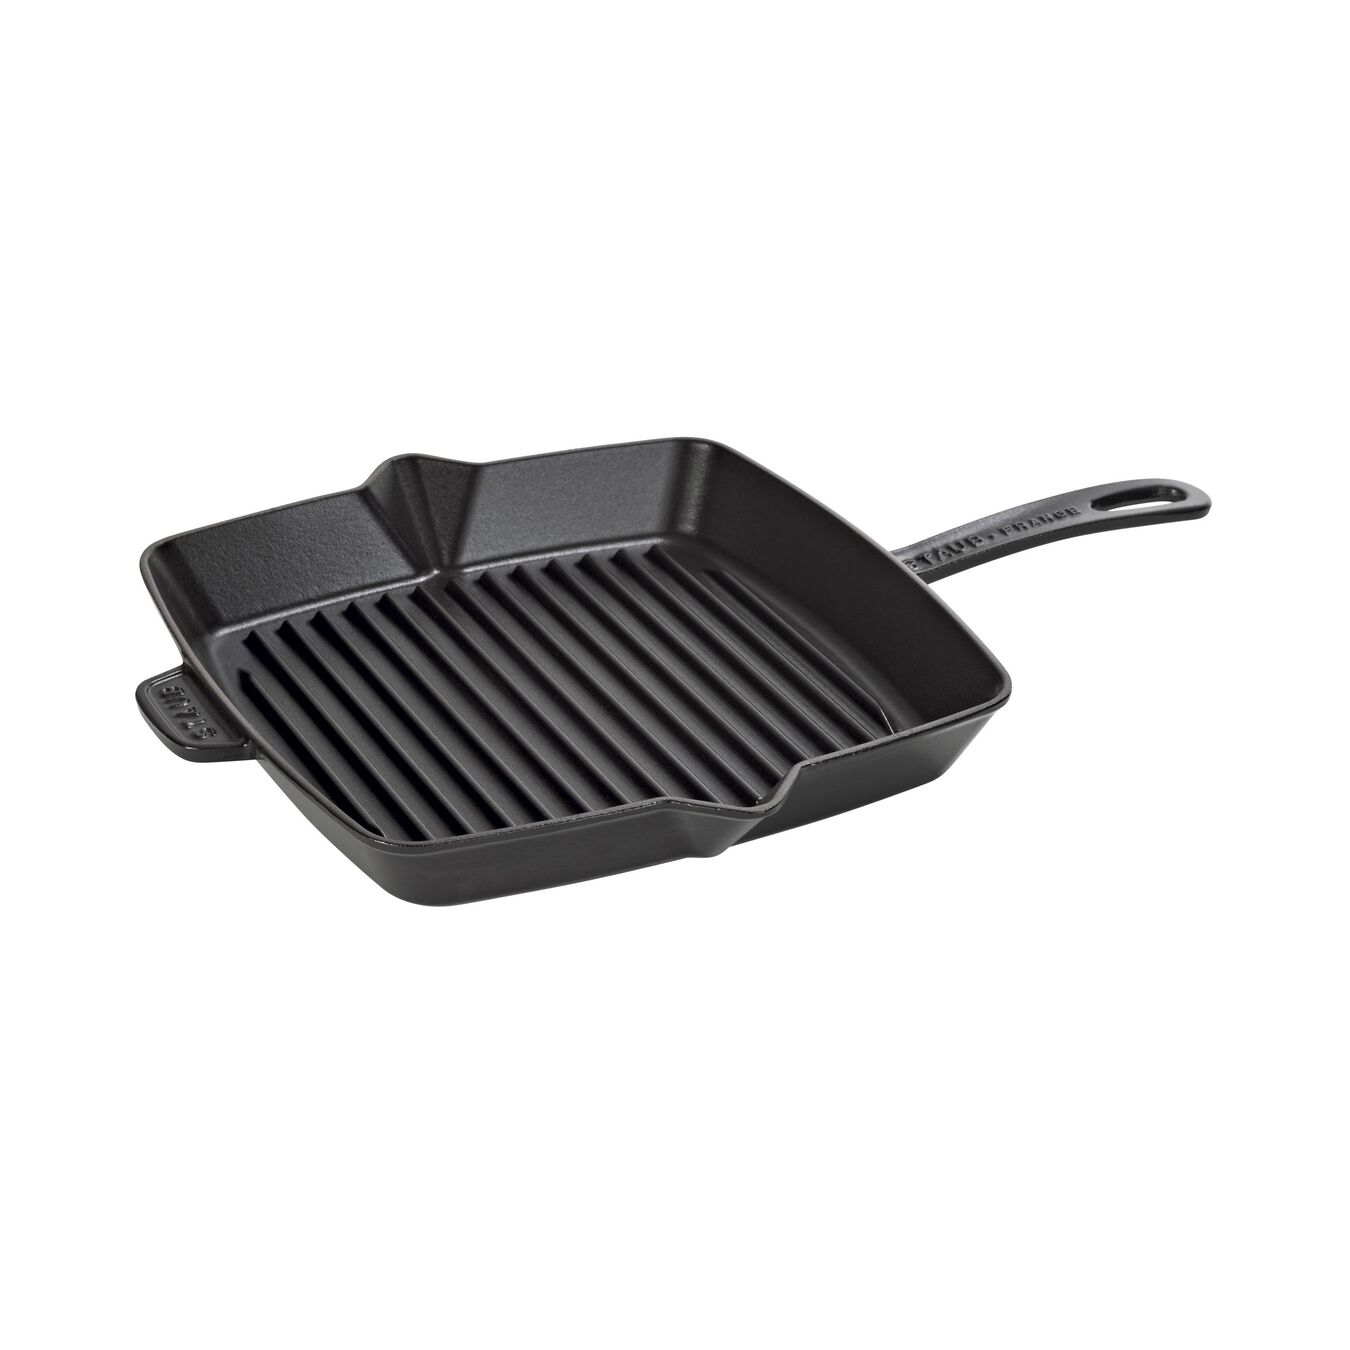 30 cm cast iron square American grill, black,,large 2